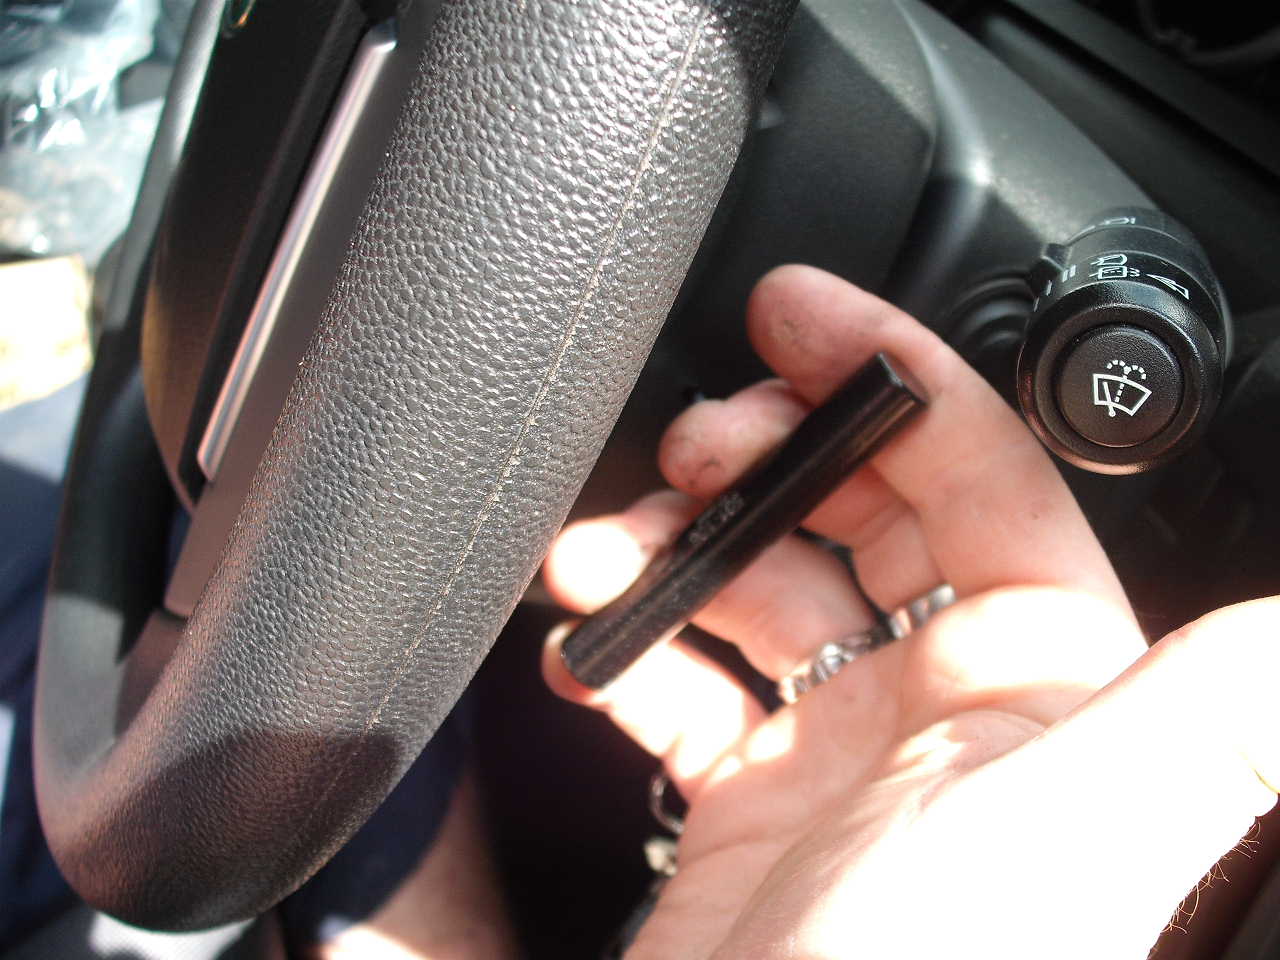 Steering Wheel Airbag Removal Tool for Range Rover Sport – Powerful UK